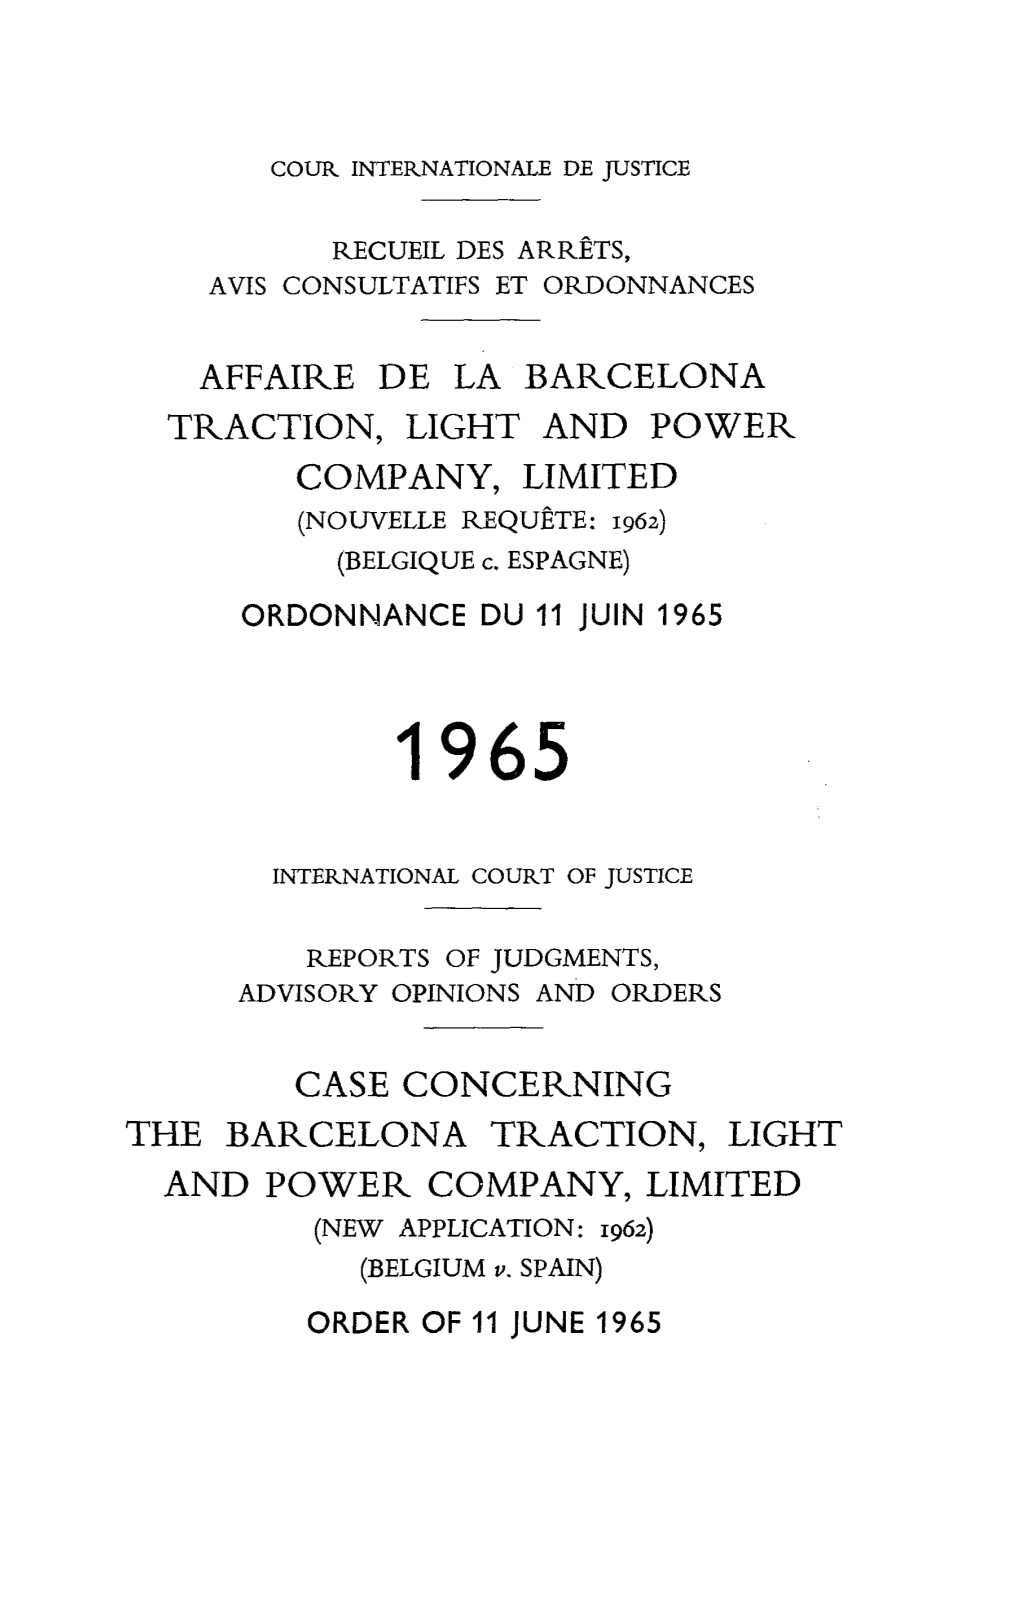 ORDER of 11 JUNE 1965 Mode Officiel De Citation: Barcelona Traction, Light and Pozeier Company, Limited, Ordonnance Du II Juin 1965, C